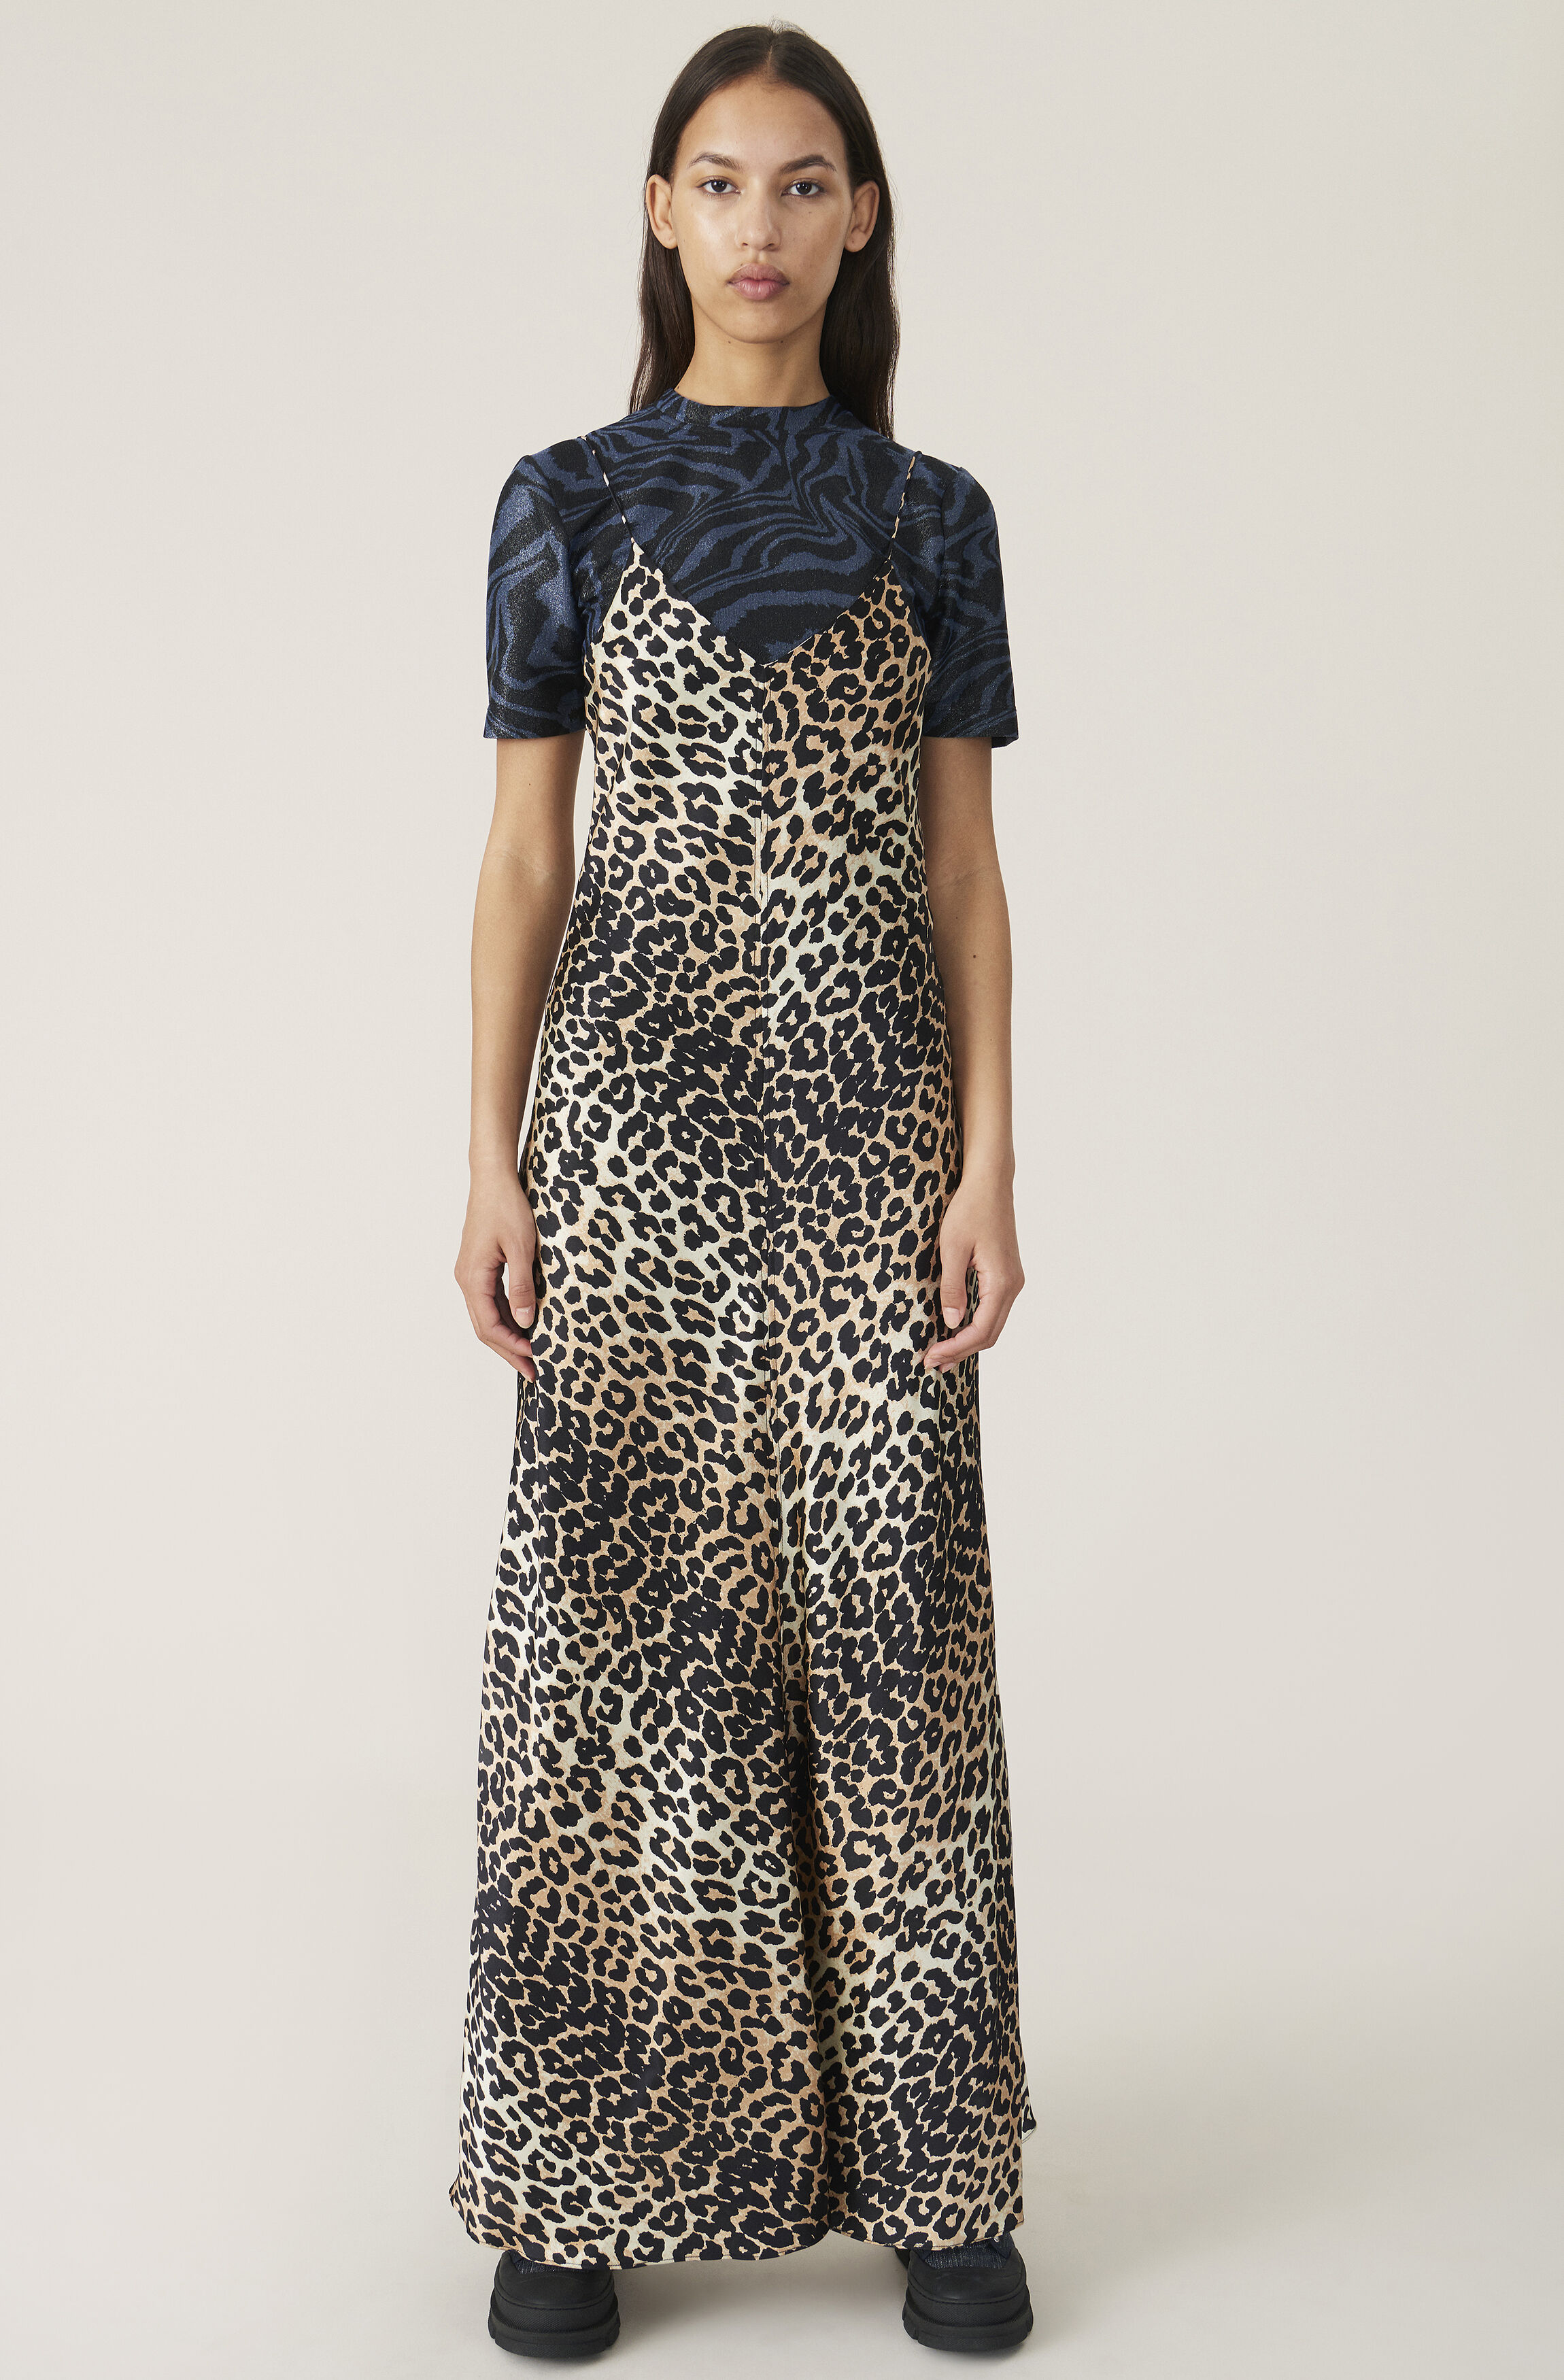 cheetah print slip dress